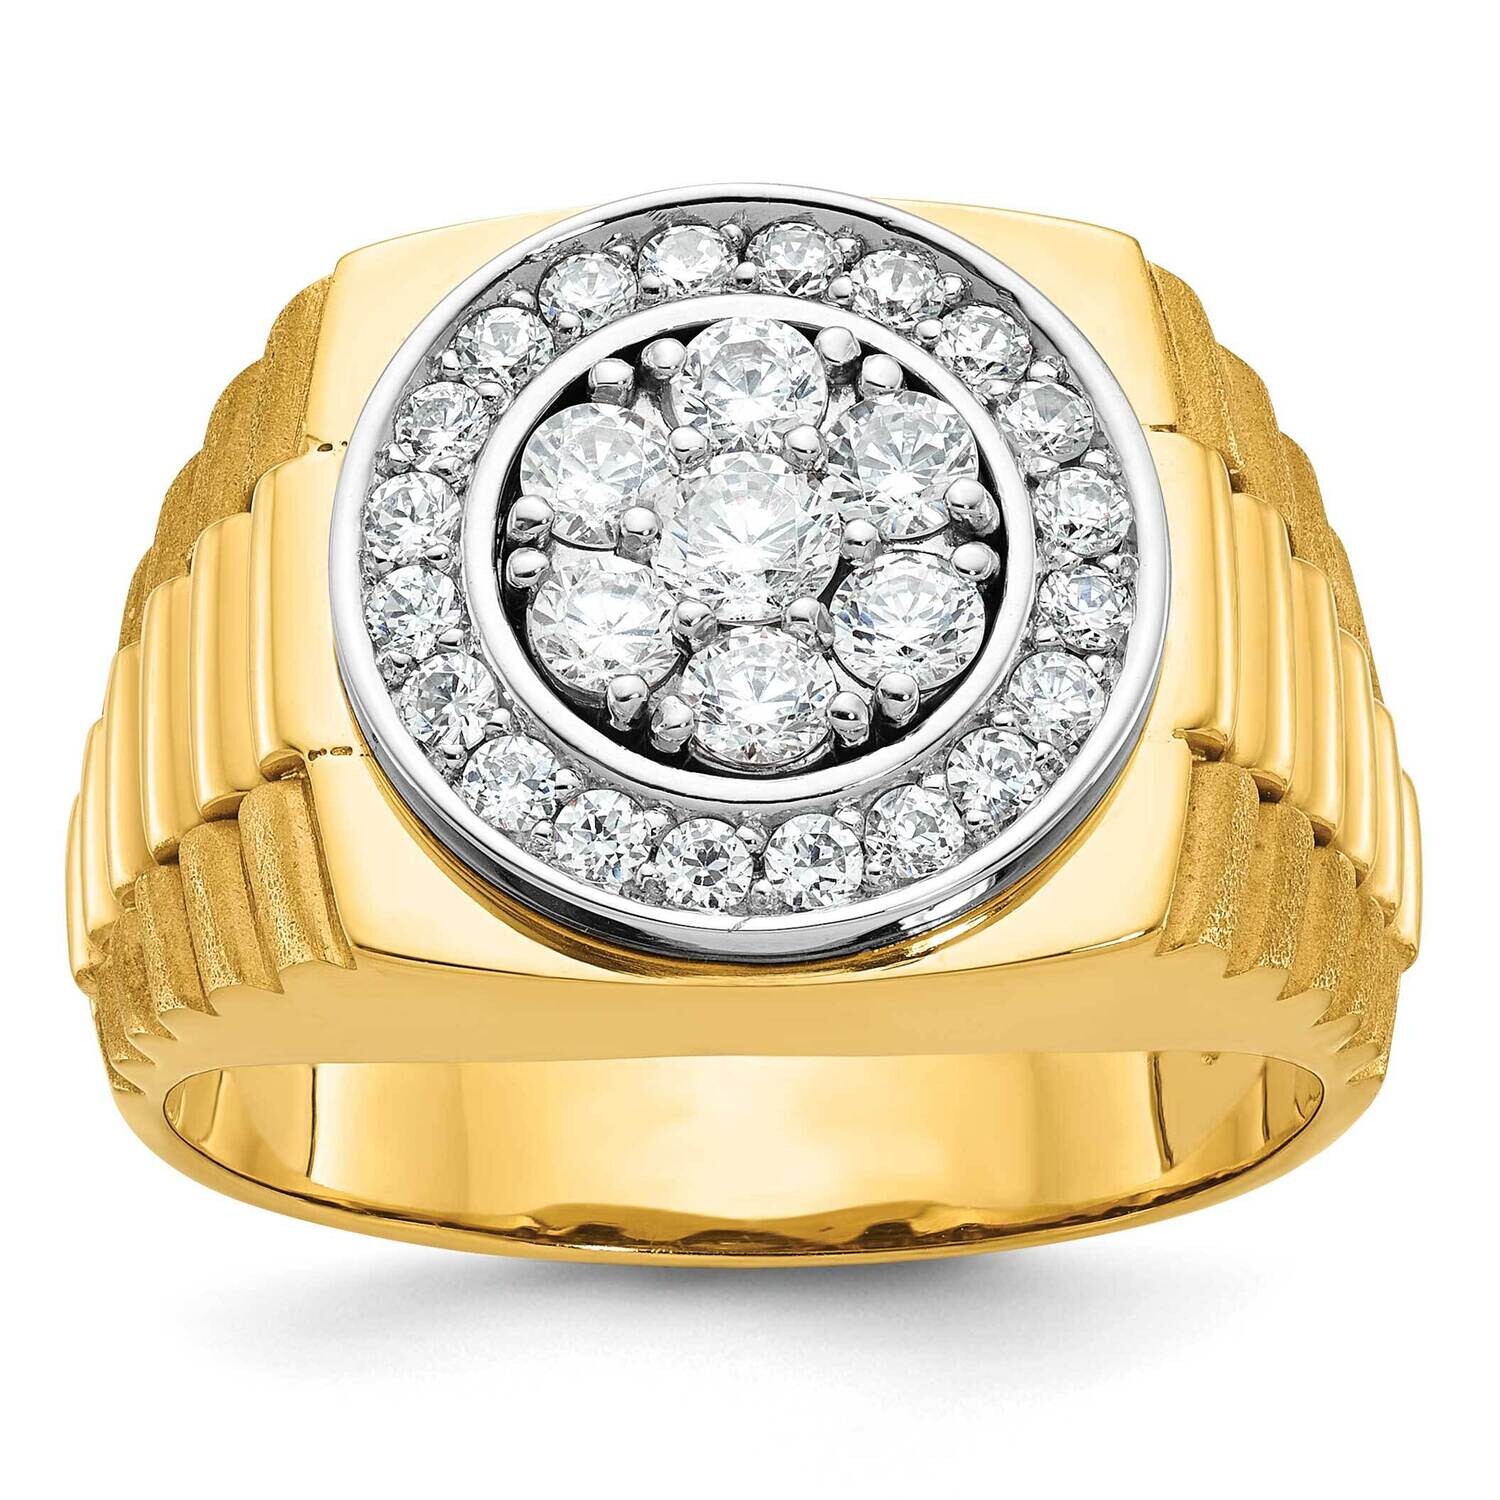 Ibgoodman Men's Polished Satin Textured 1 Carat Aa Quality Diamond Ring 14k Two-Tone Gold B58334-4YWAA